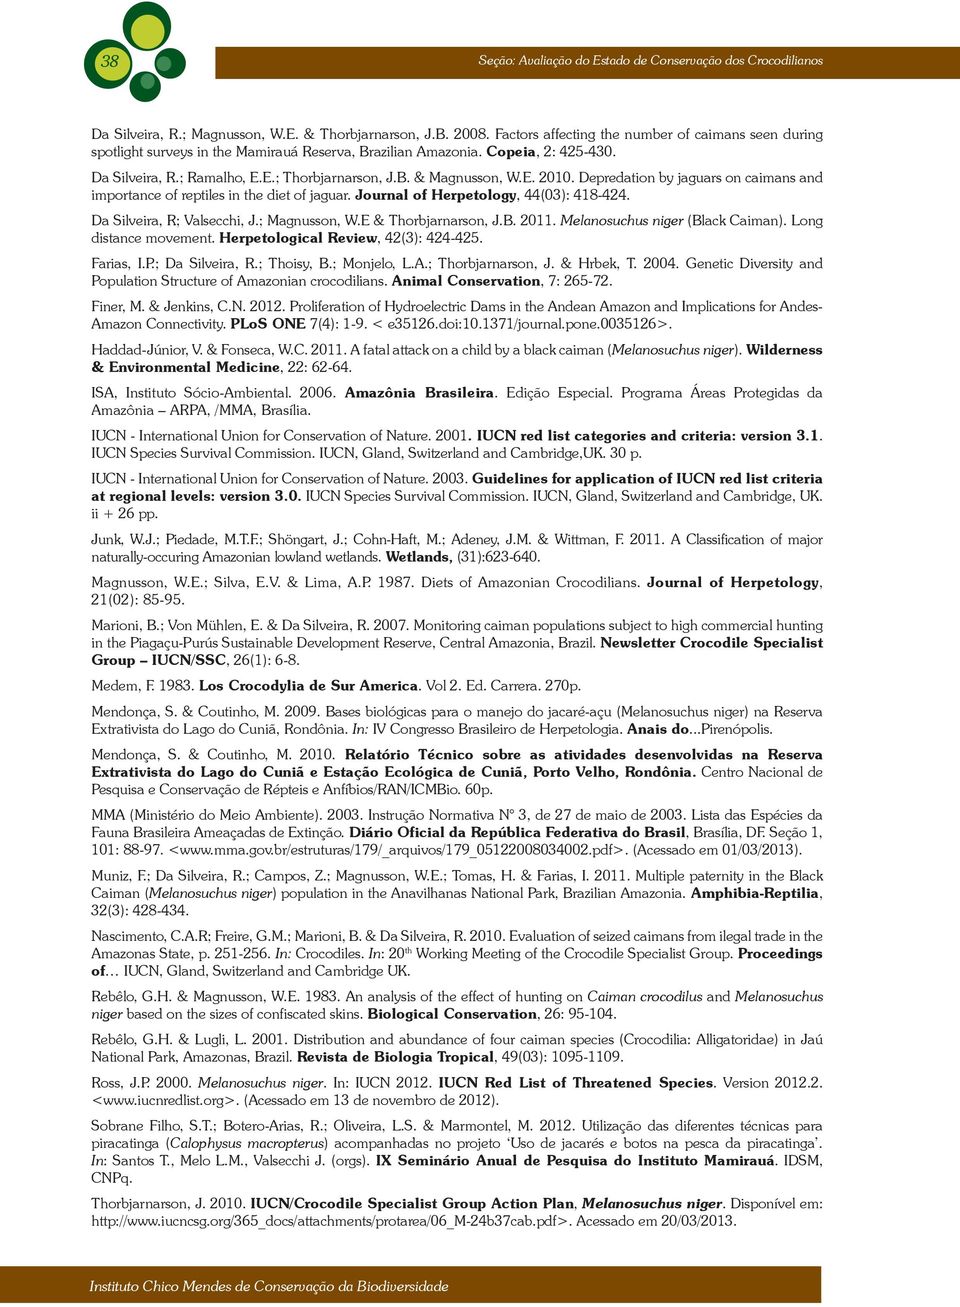 E. 2010. Depredation by jaguars on caimans and importance of reptiles in the diet of jaguar. Journal of Herpetology, 44(03): 418-424. Da Silveira, R; Valsecchi, J.; Magnusson, W.E & Thorbjarnarson, J.